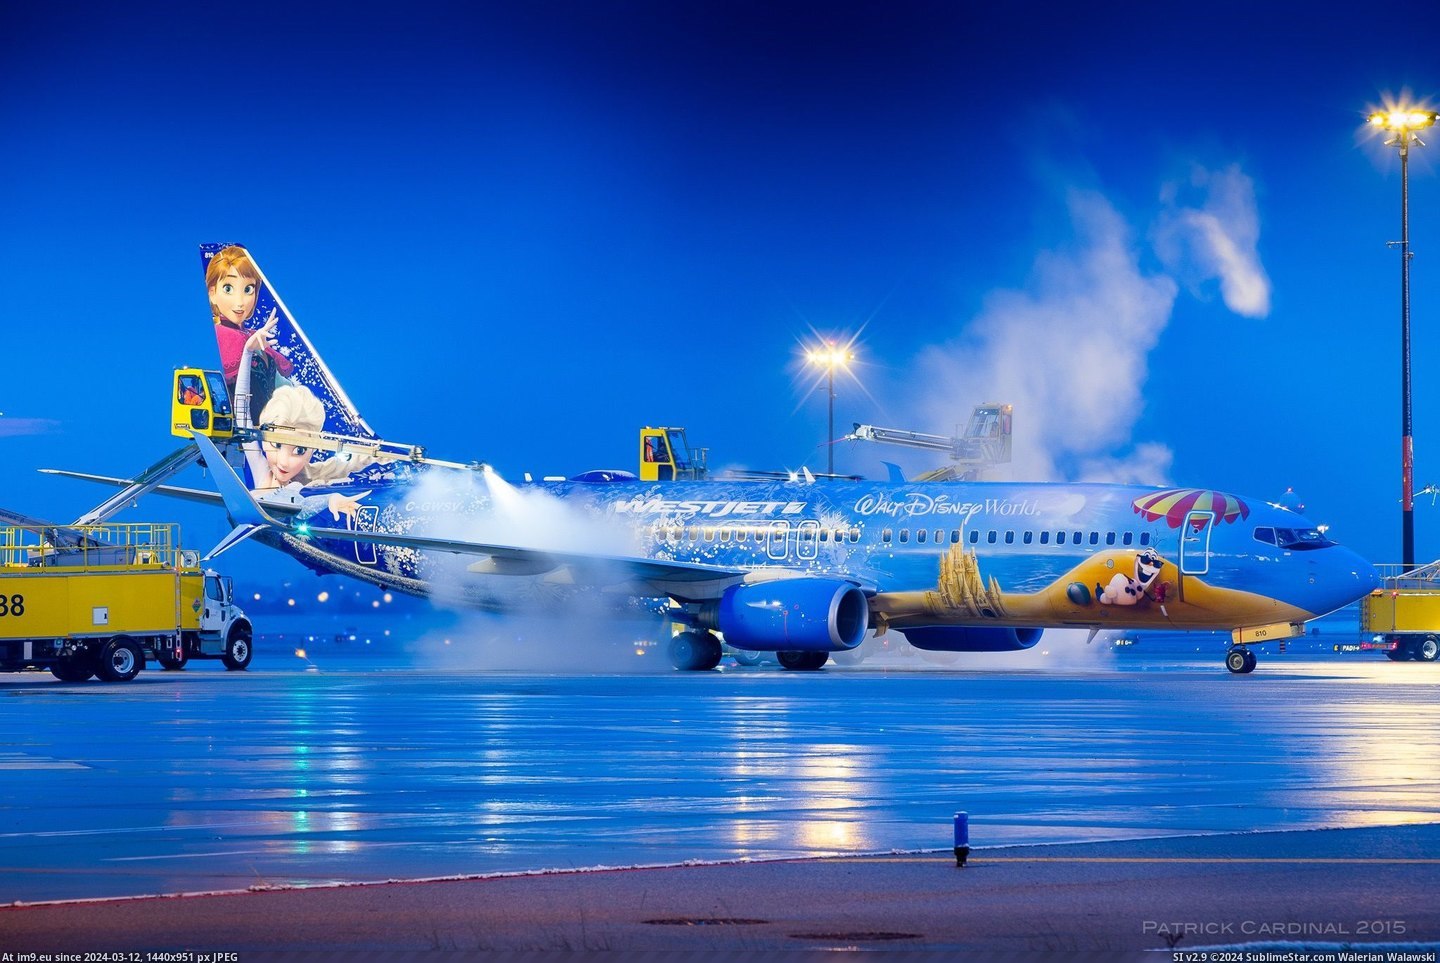 #Frozen #Airport #Crews #Plane #Ground [Pics] Airport ground crews de-icing a Frozen plane Pic. (Obraz z album My r/PICS favs))